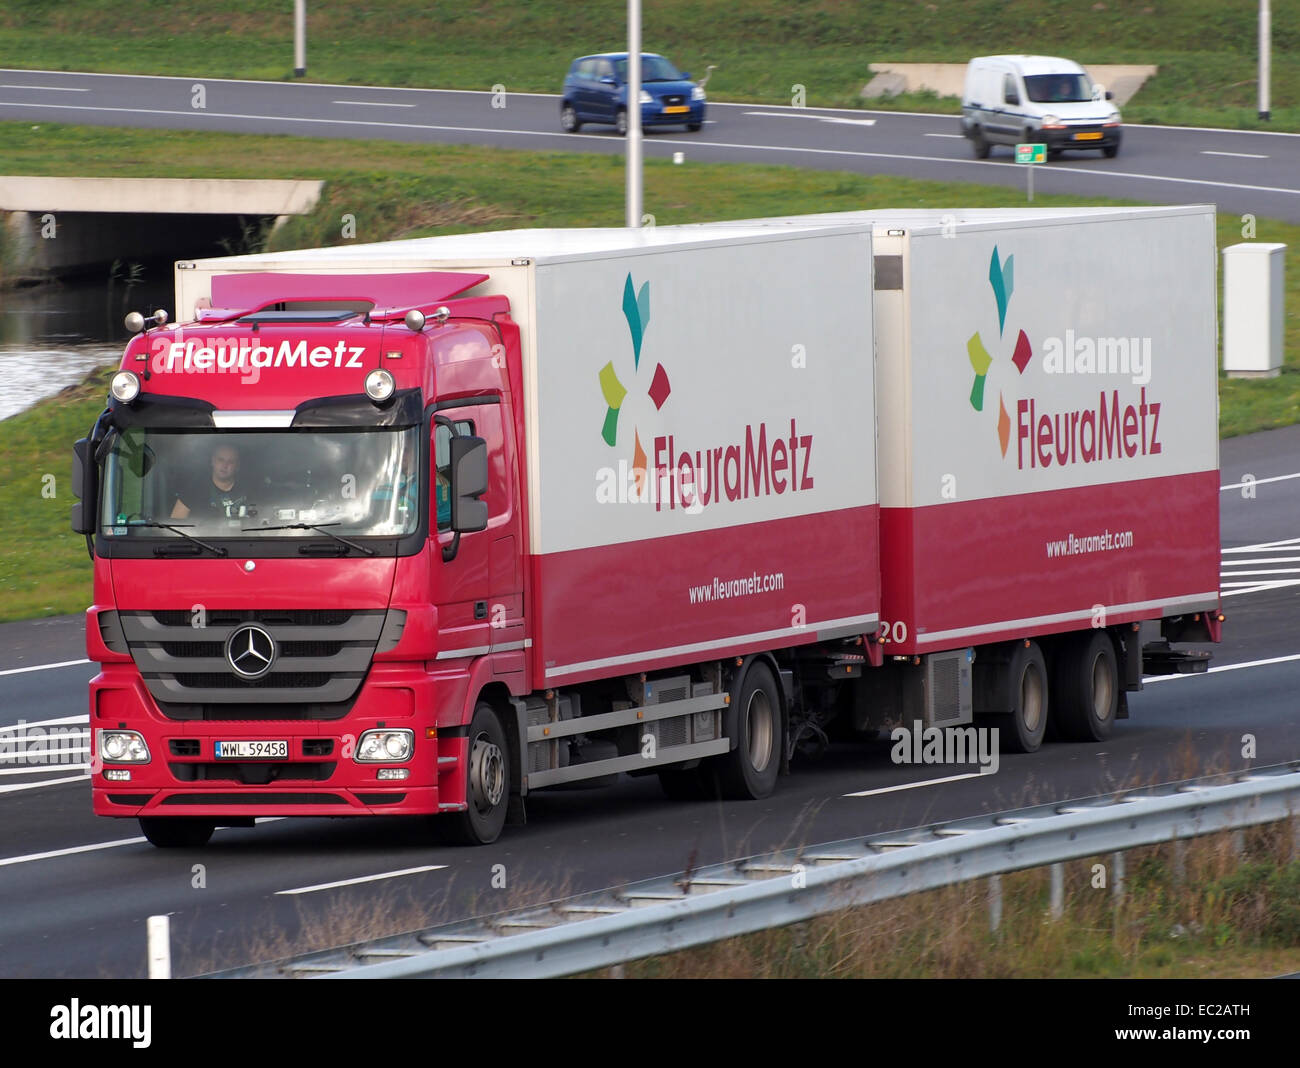 Mercedes truck, FleuraMetz Stock Photo